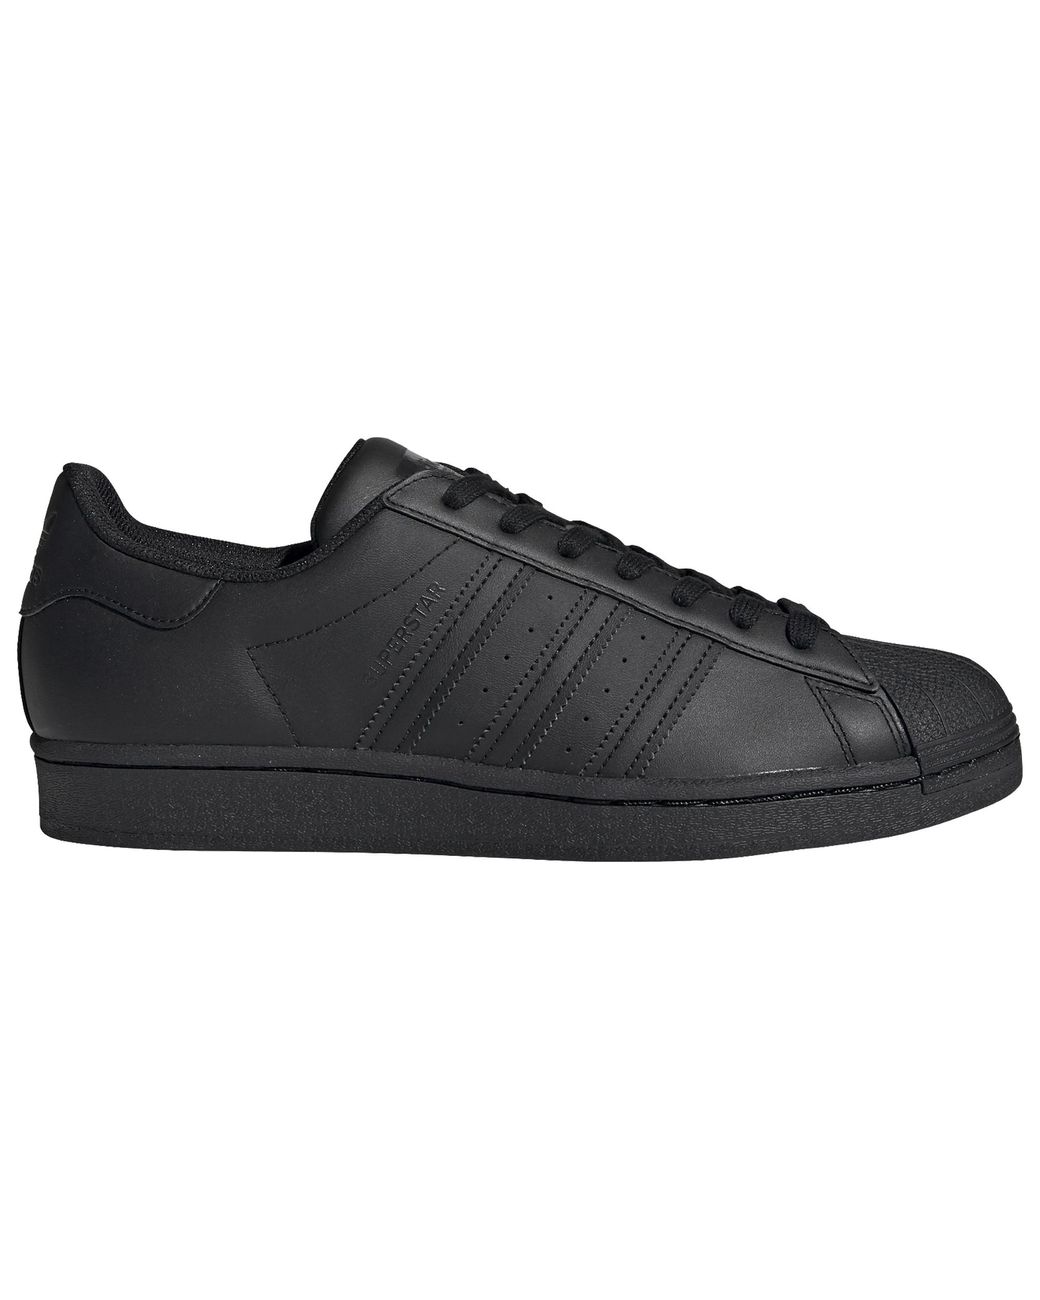 adidas Originals Leather Superstar - Basketball Shoes in Black/Black ...